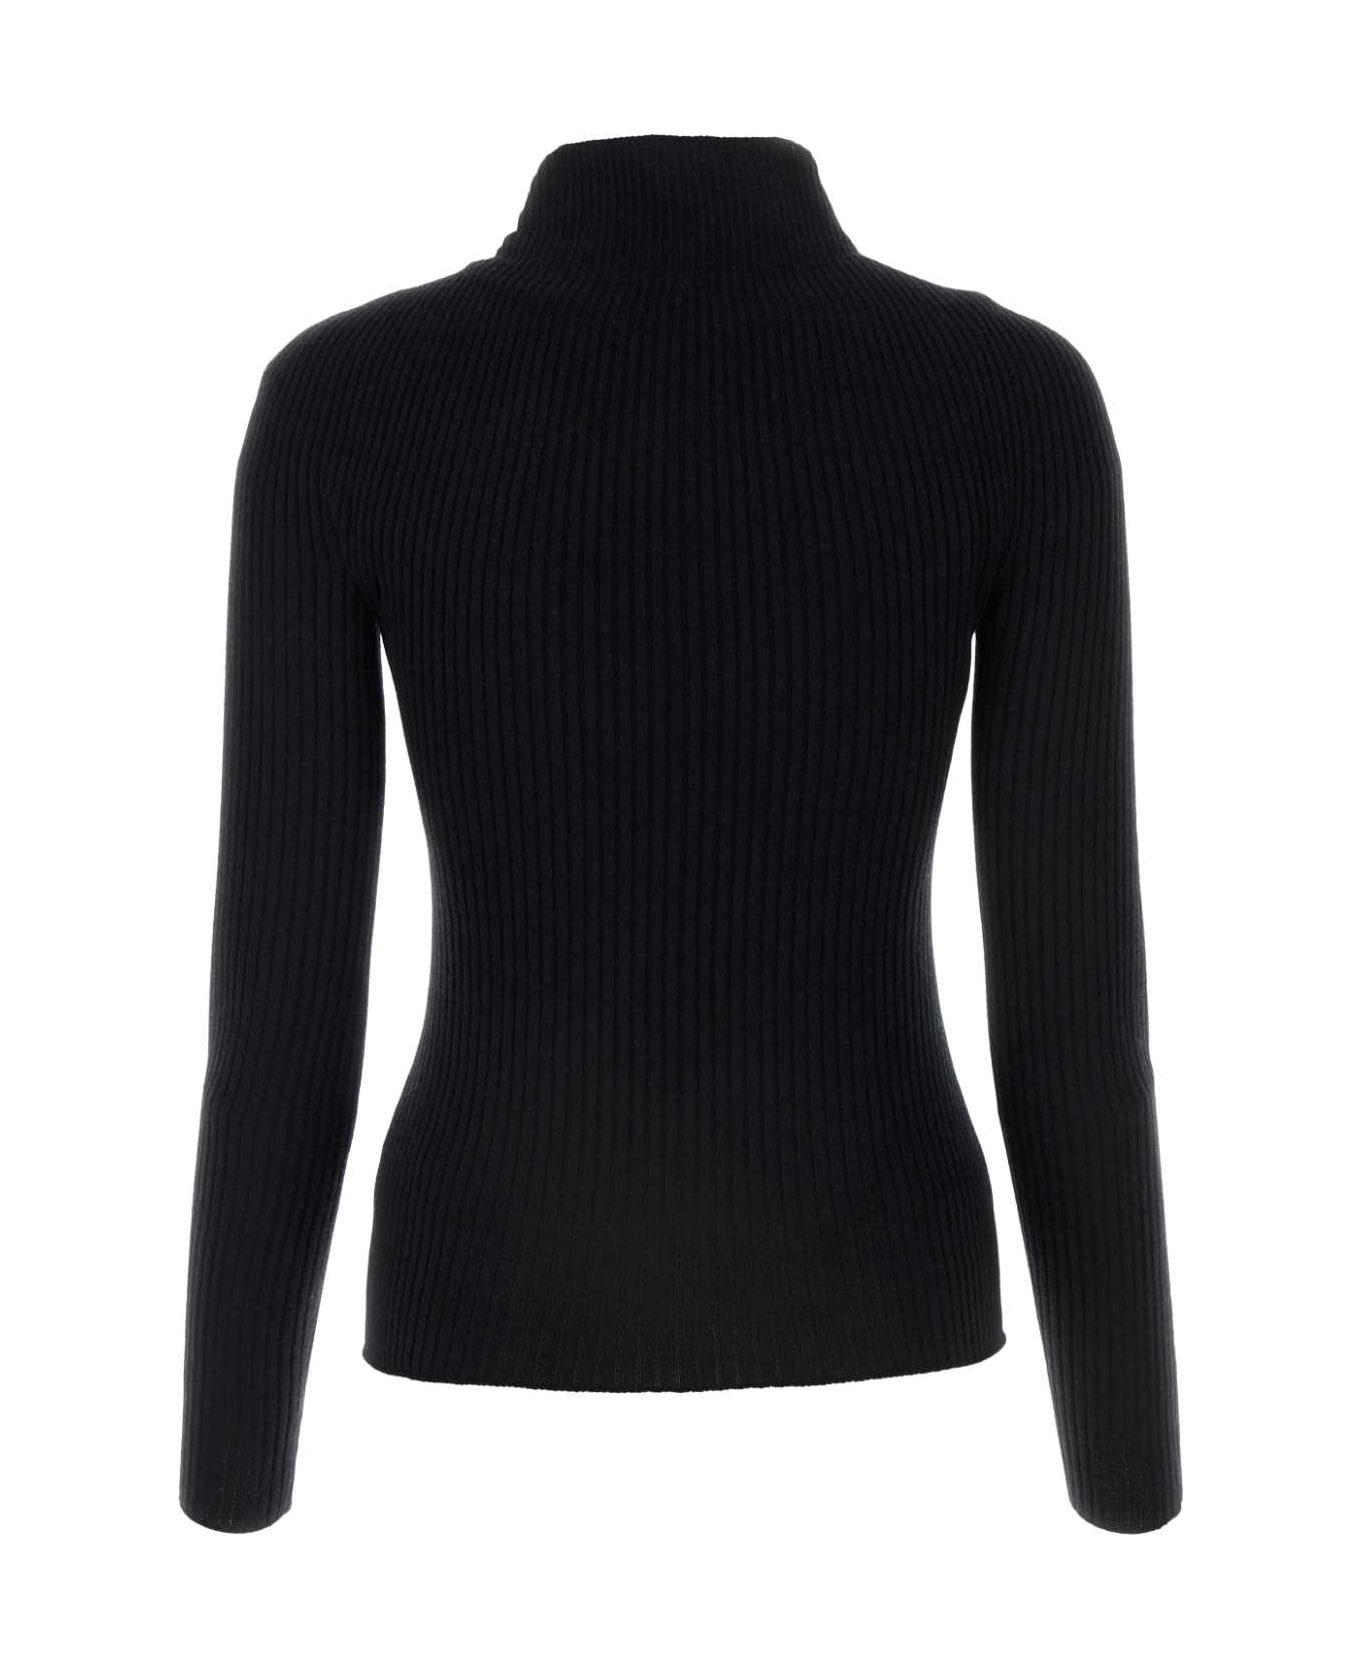 Courrèges Black Cotton Blend Sweater - Black ニットウェア